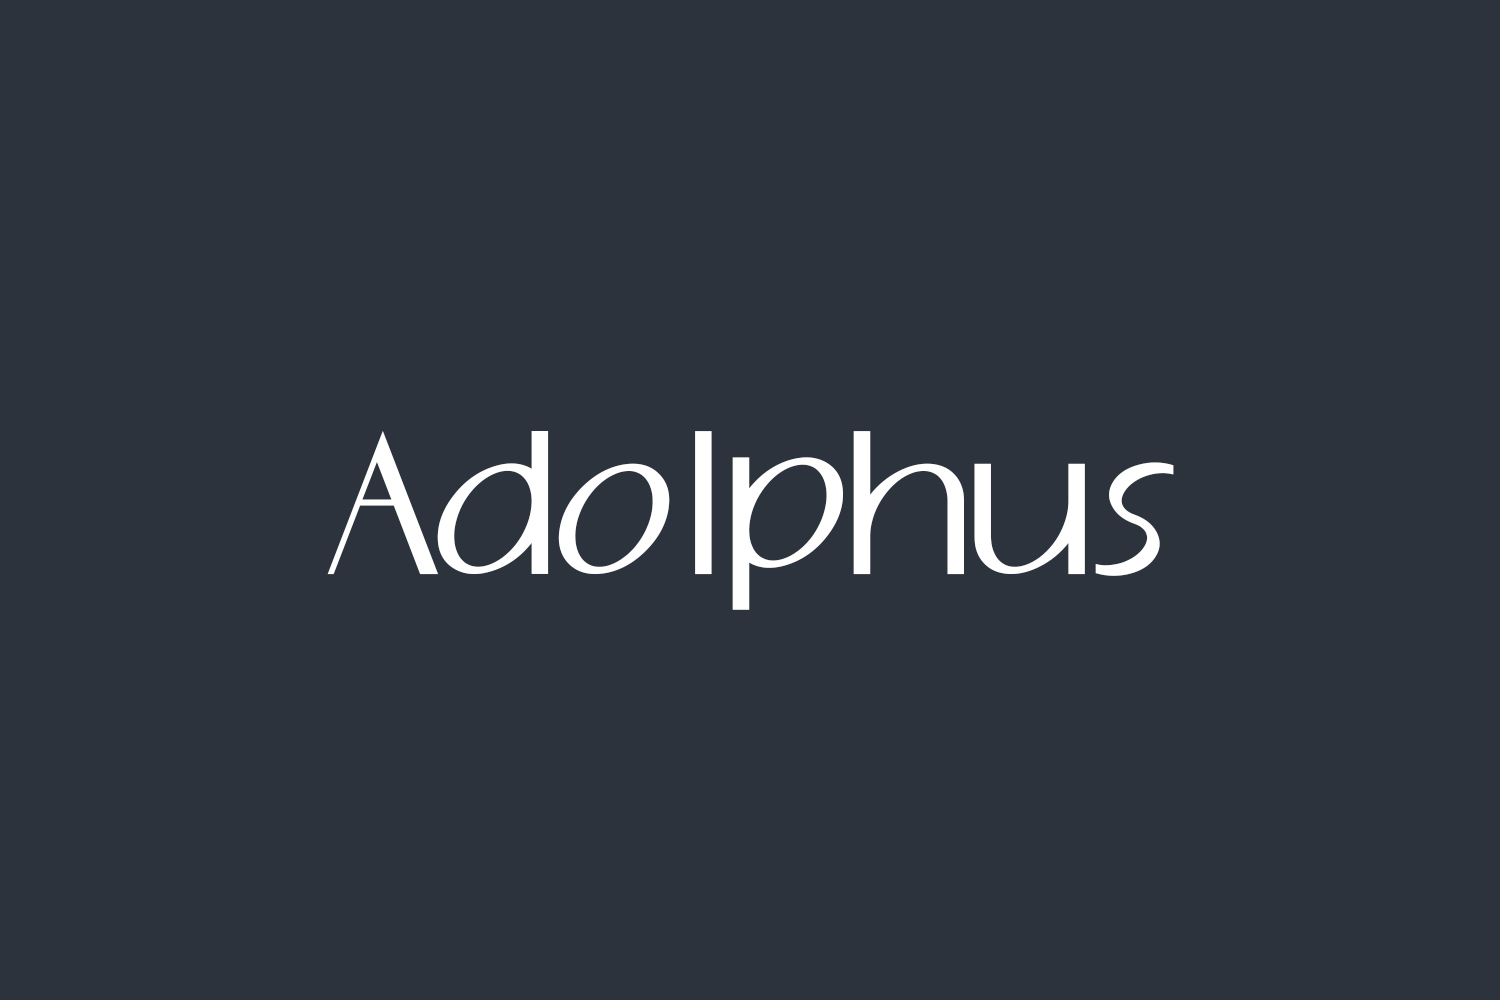 Adolphus Free Font